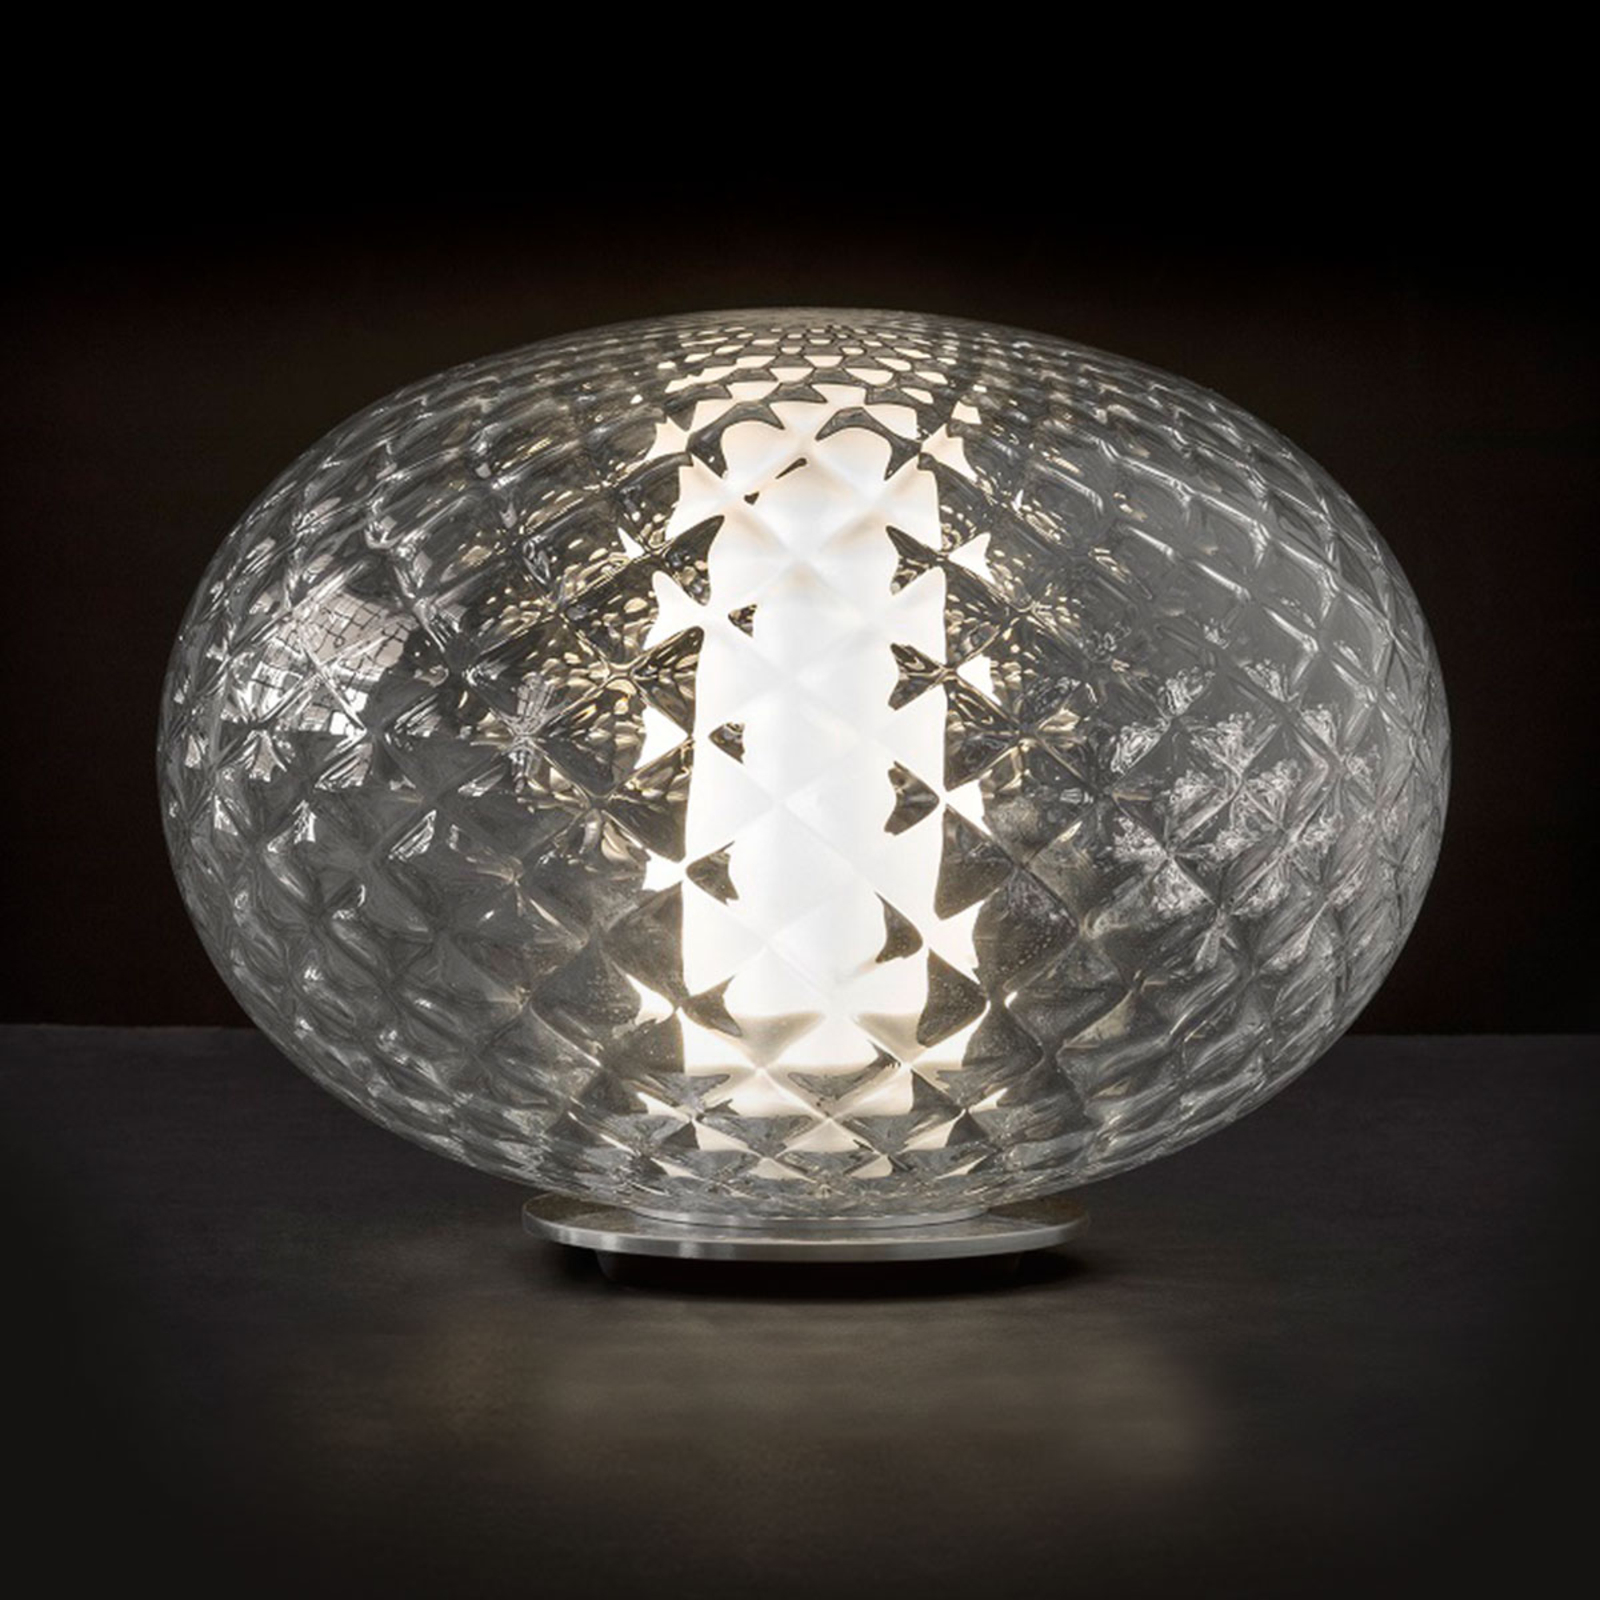 Oluce Recuerdo - LED table lamp made of glass